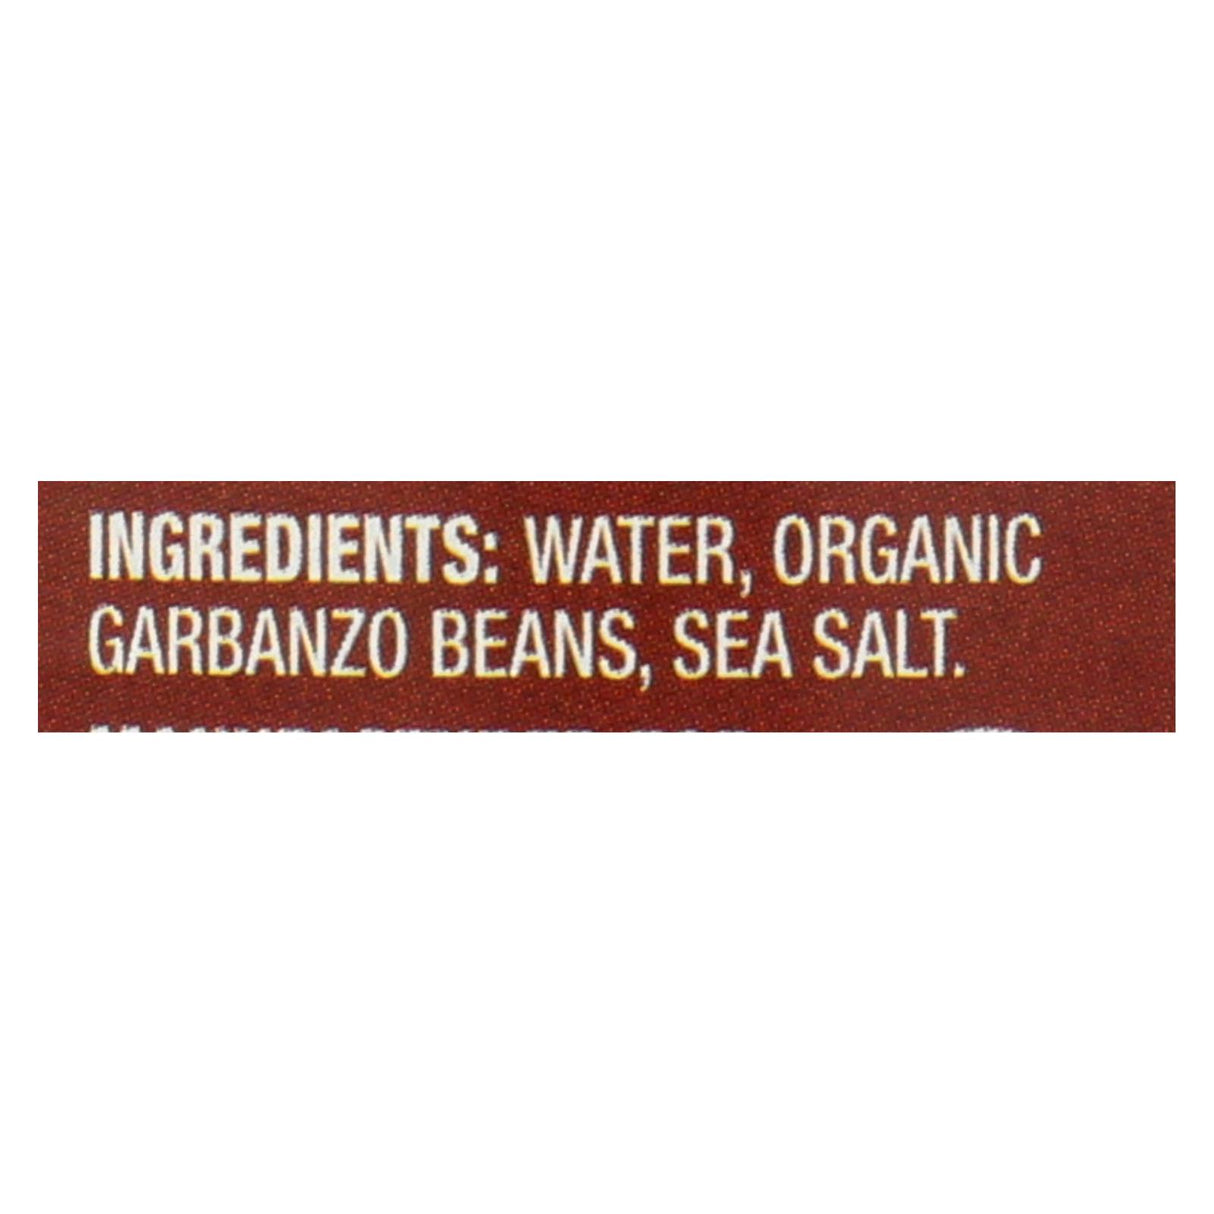 Westbrae Foods Organic Garbanzo Beans, 15 Oz Pack of 12 - Cozy Farm 